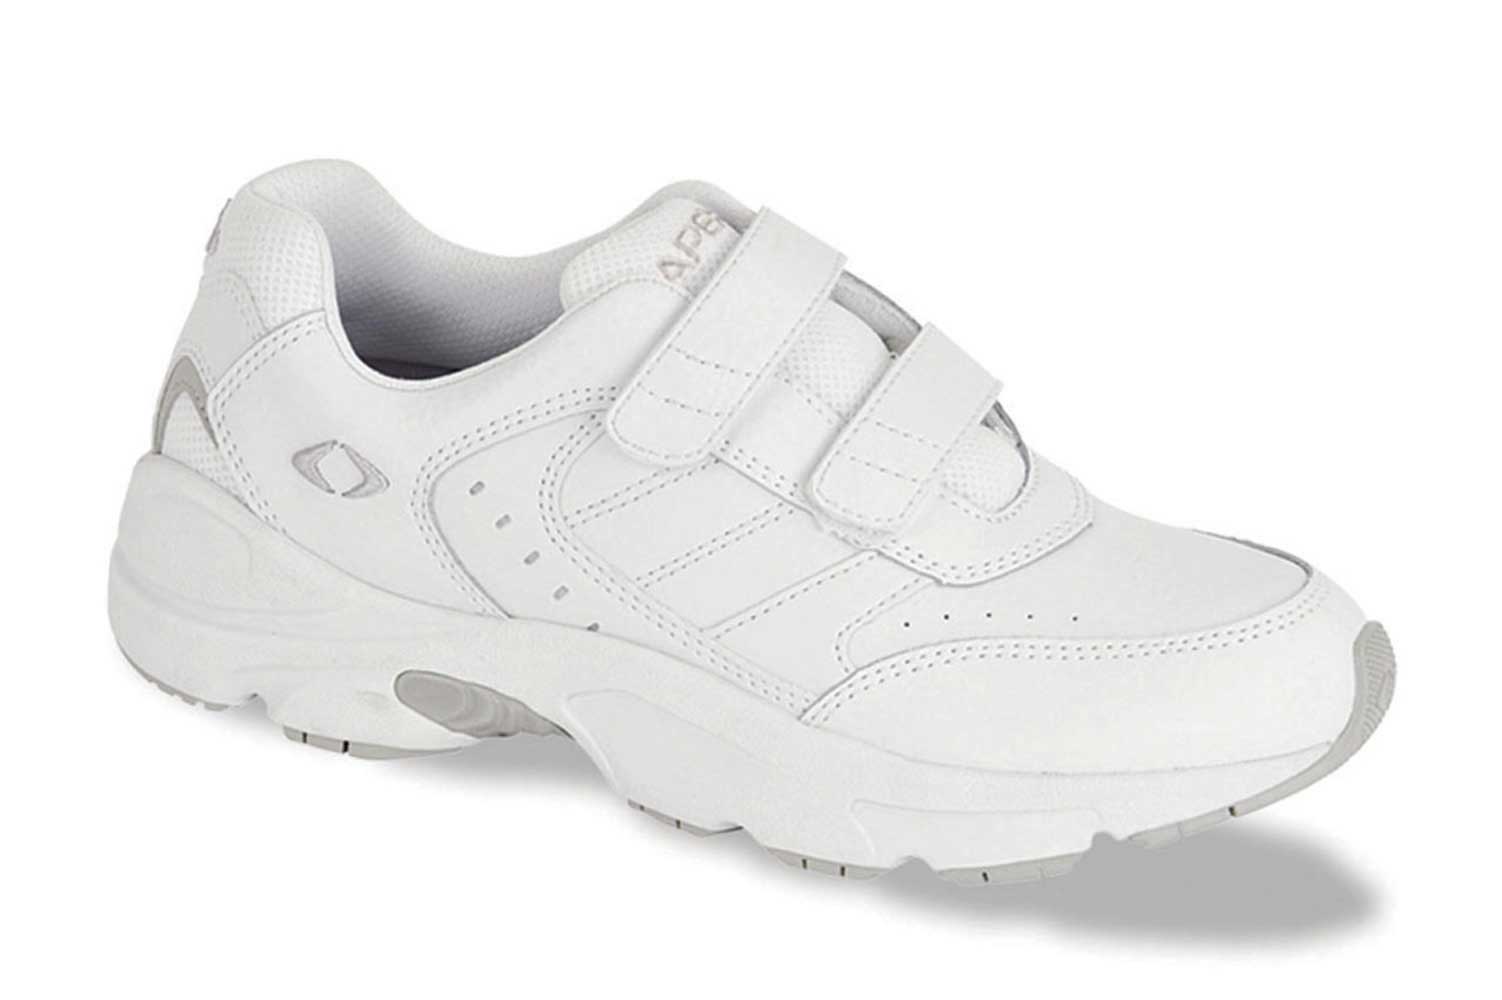 Apex Shoes V952M Walker Athletic Shoe - Men's Comfort Therapeutic Diabetic Shoe - Medium - Extra Wide - Extra Depth For Orthotics